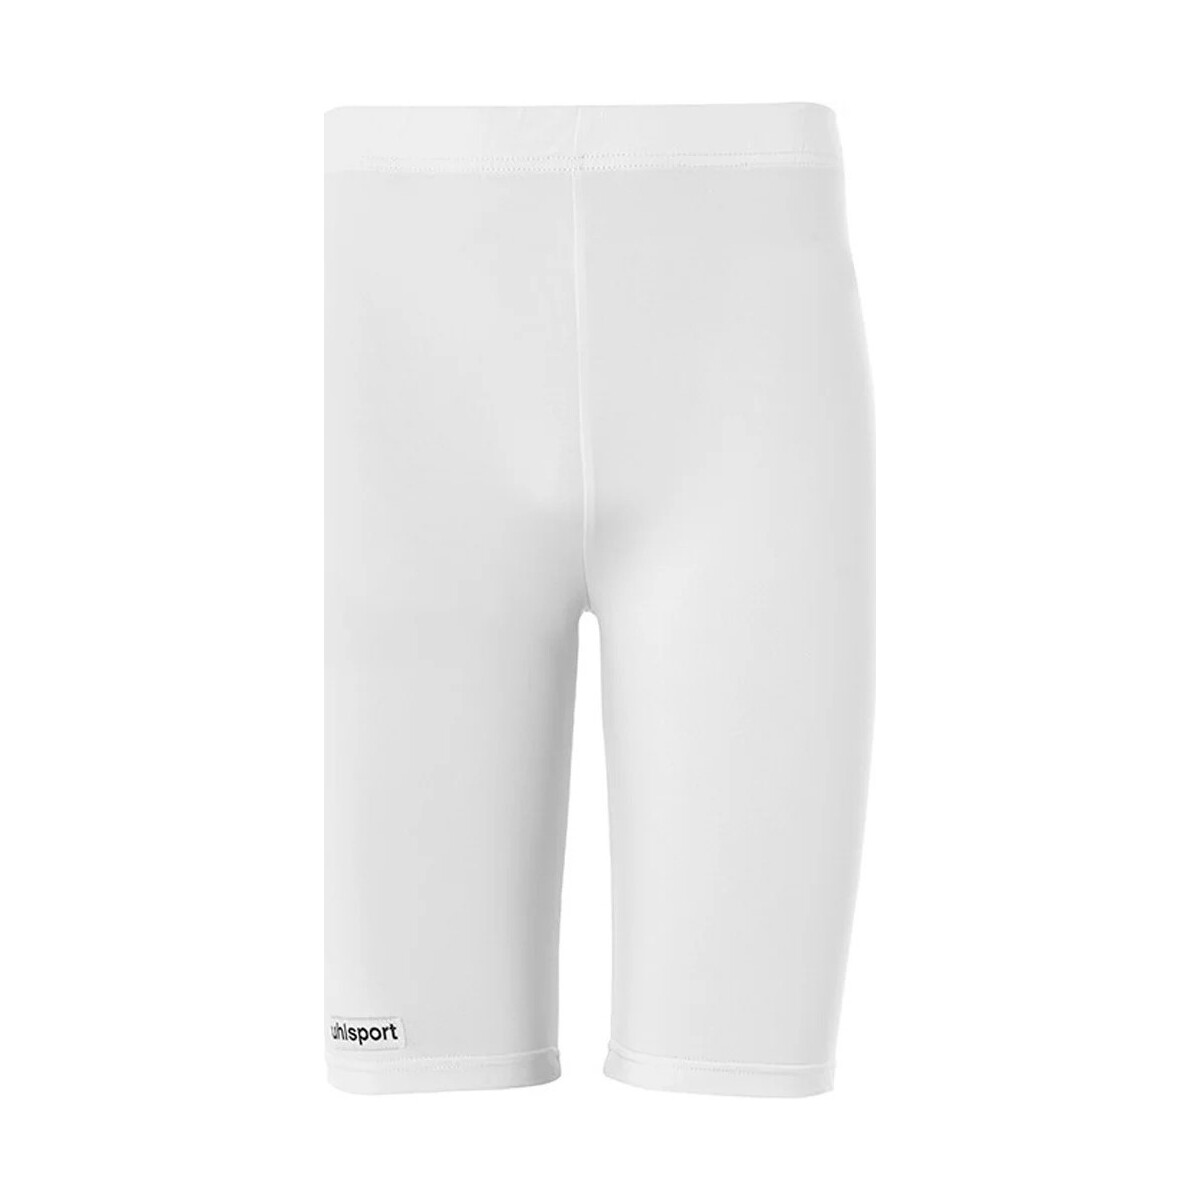 textil Shorts / Bermudas Uhlsport DISTINCTION COLORS TIGHTS Blanco